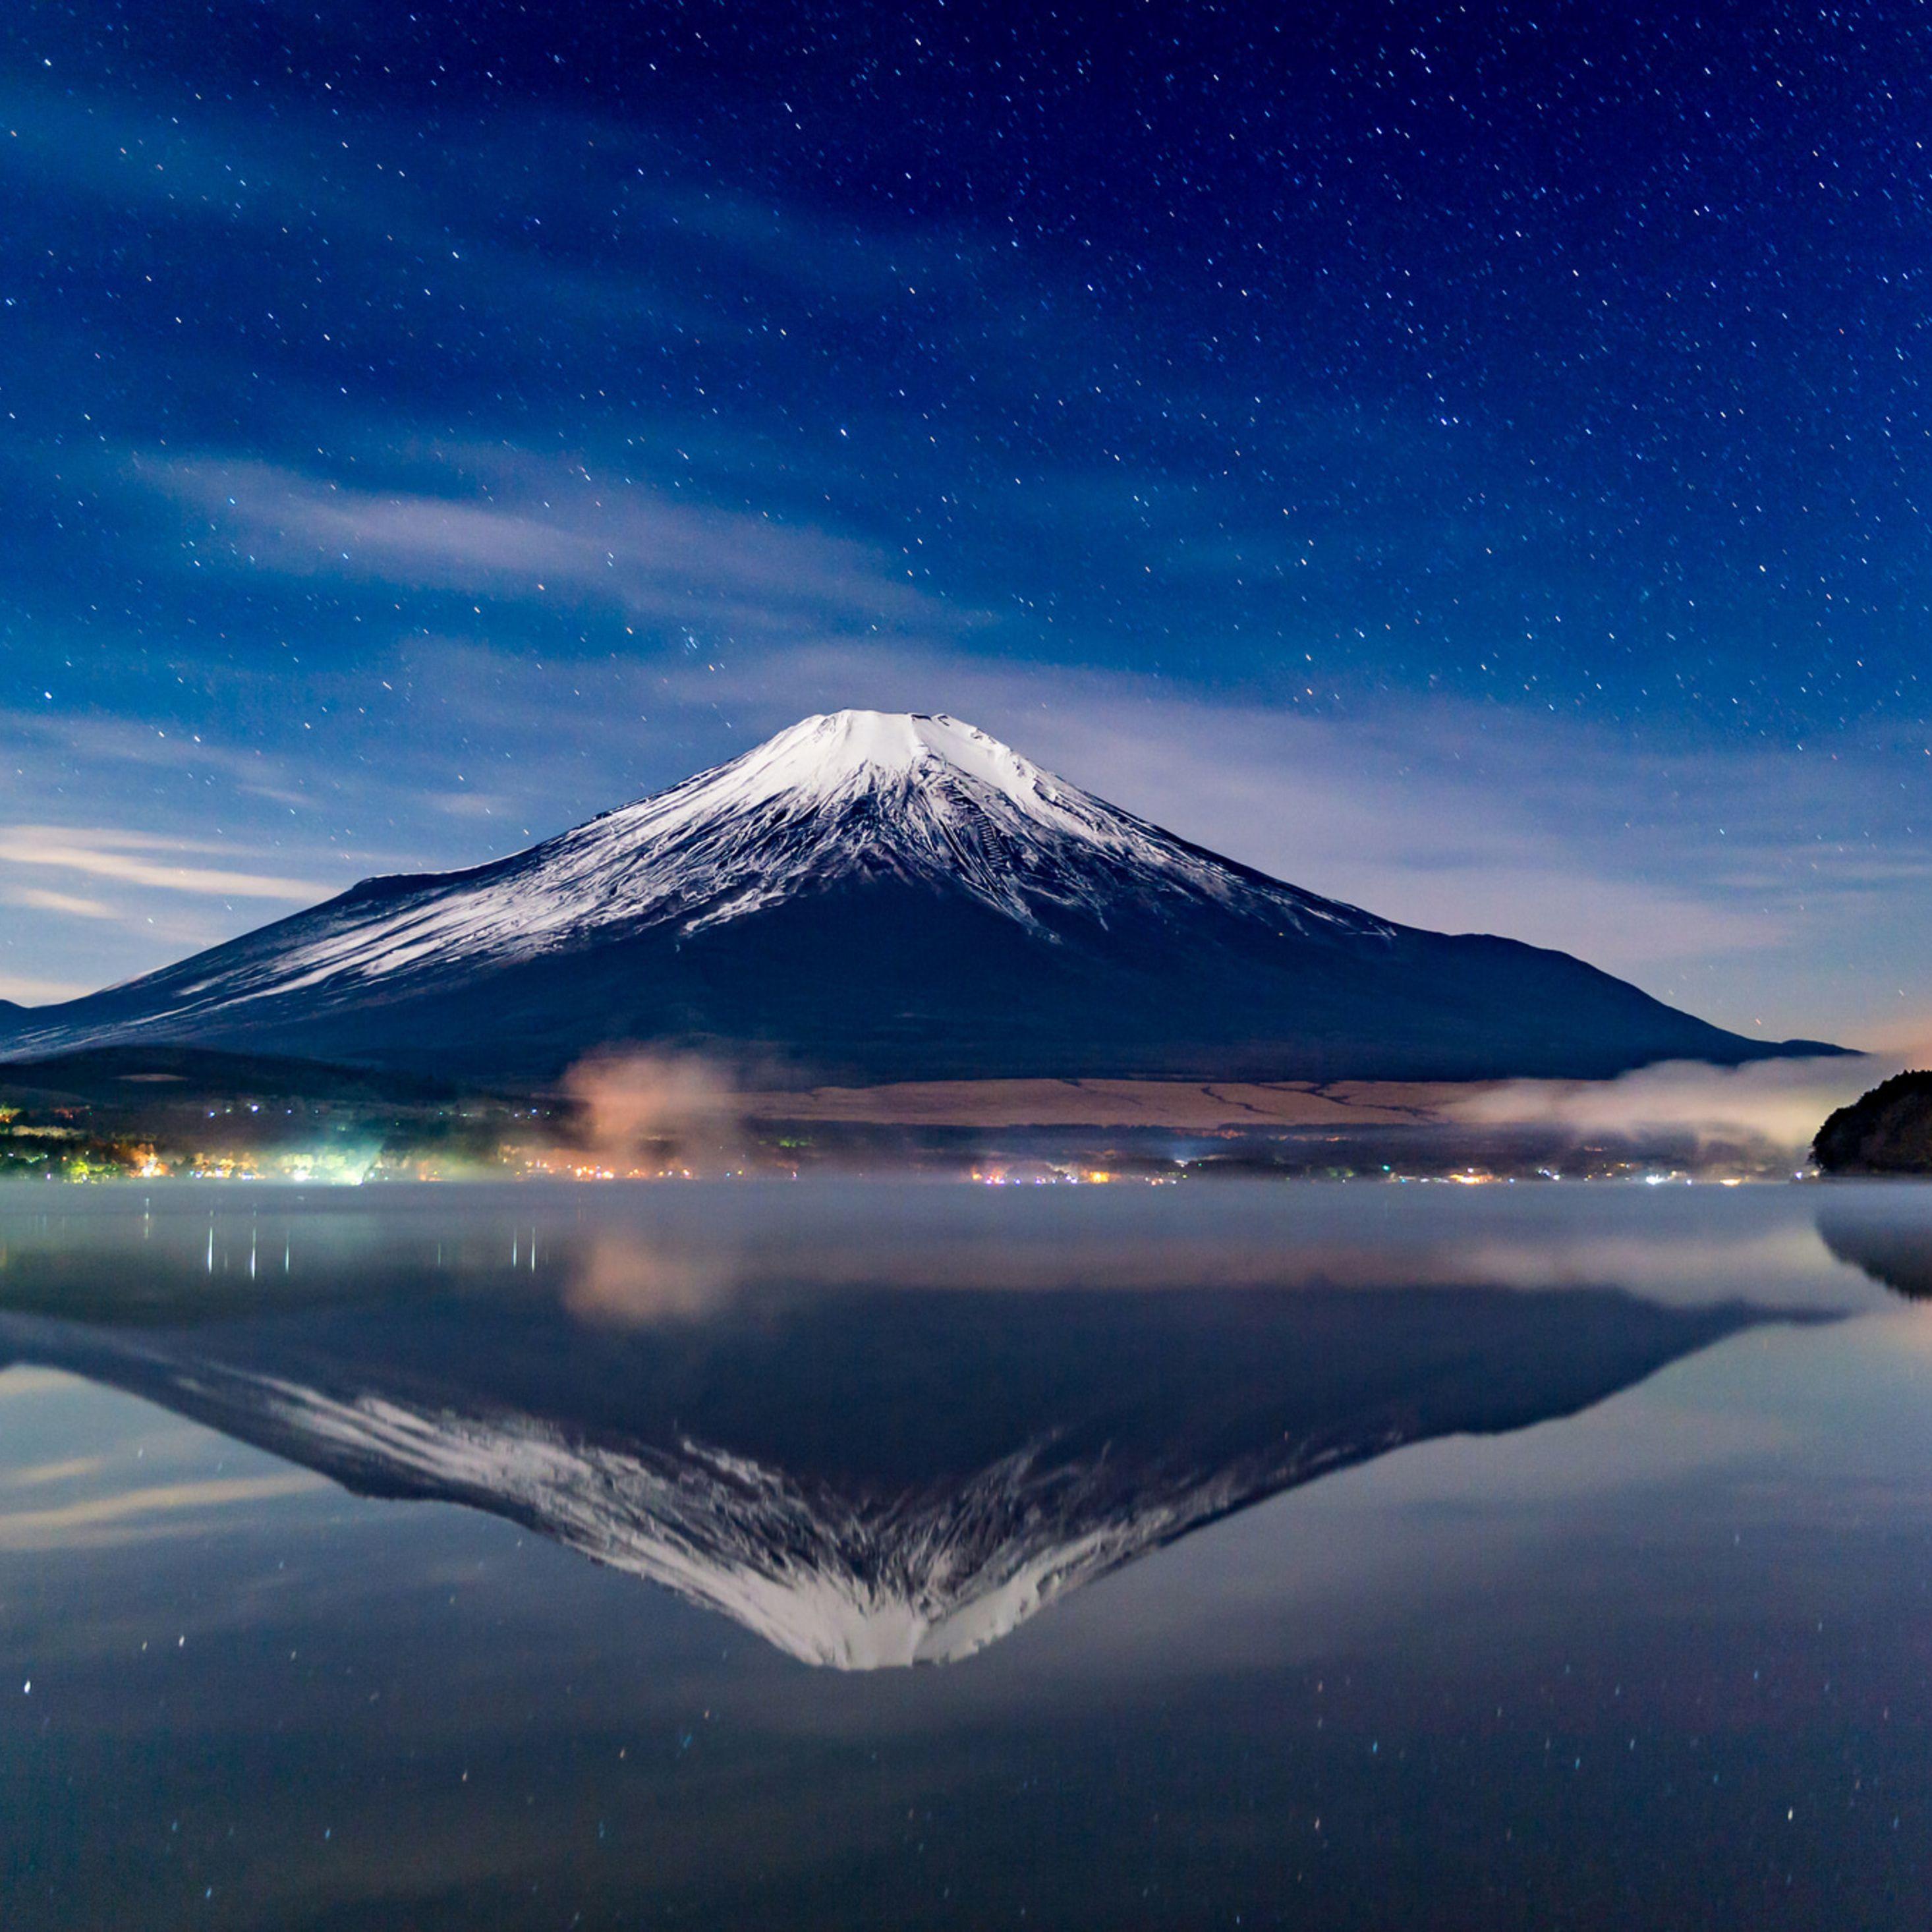 Night Mount Fuji Wallpapers - Top Free Night Mount Fuji Backgrounds